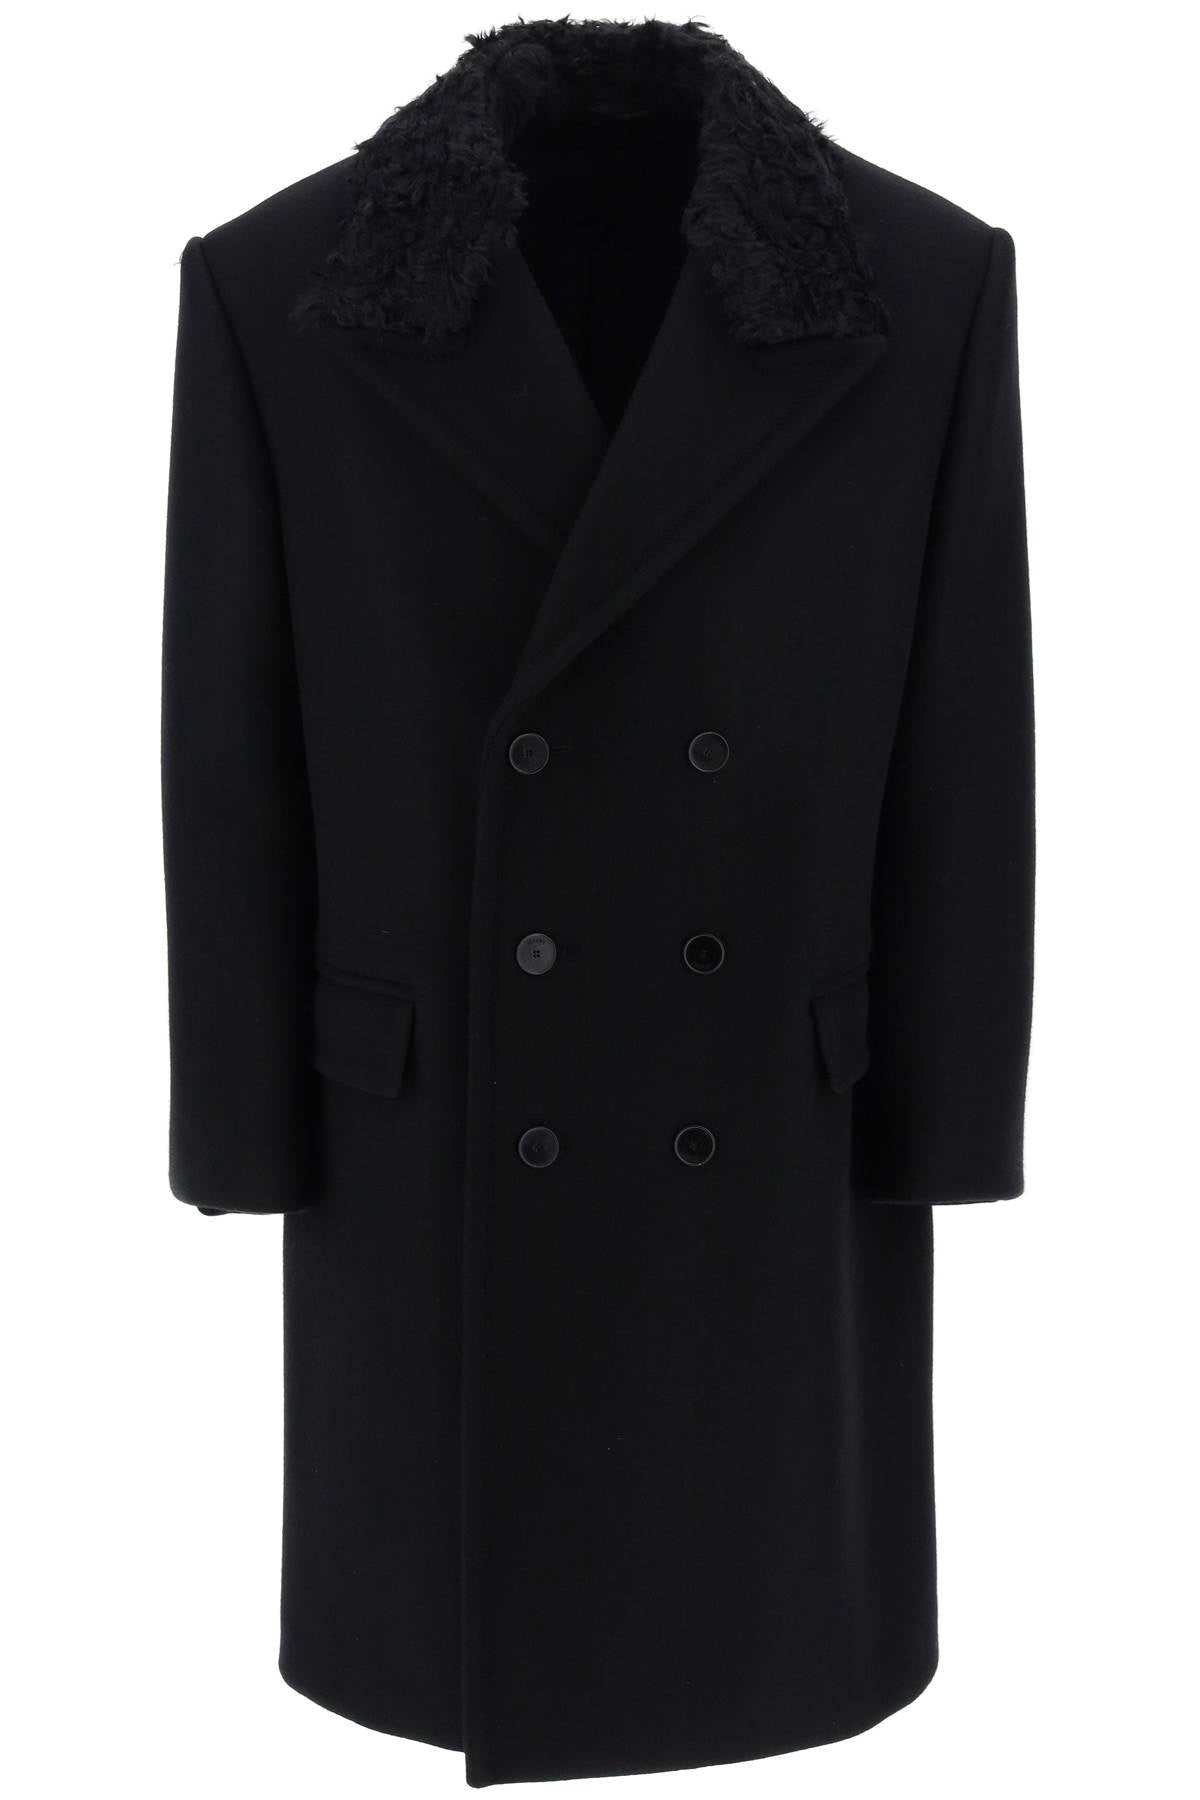 Lanvin wool oversize coat-0